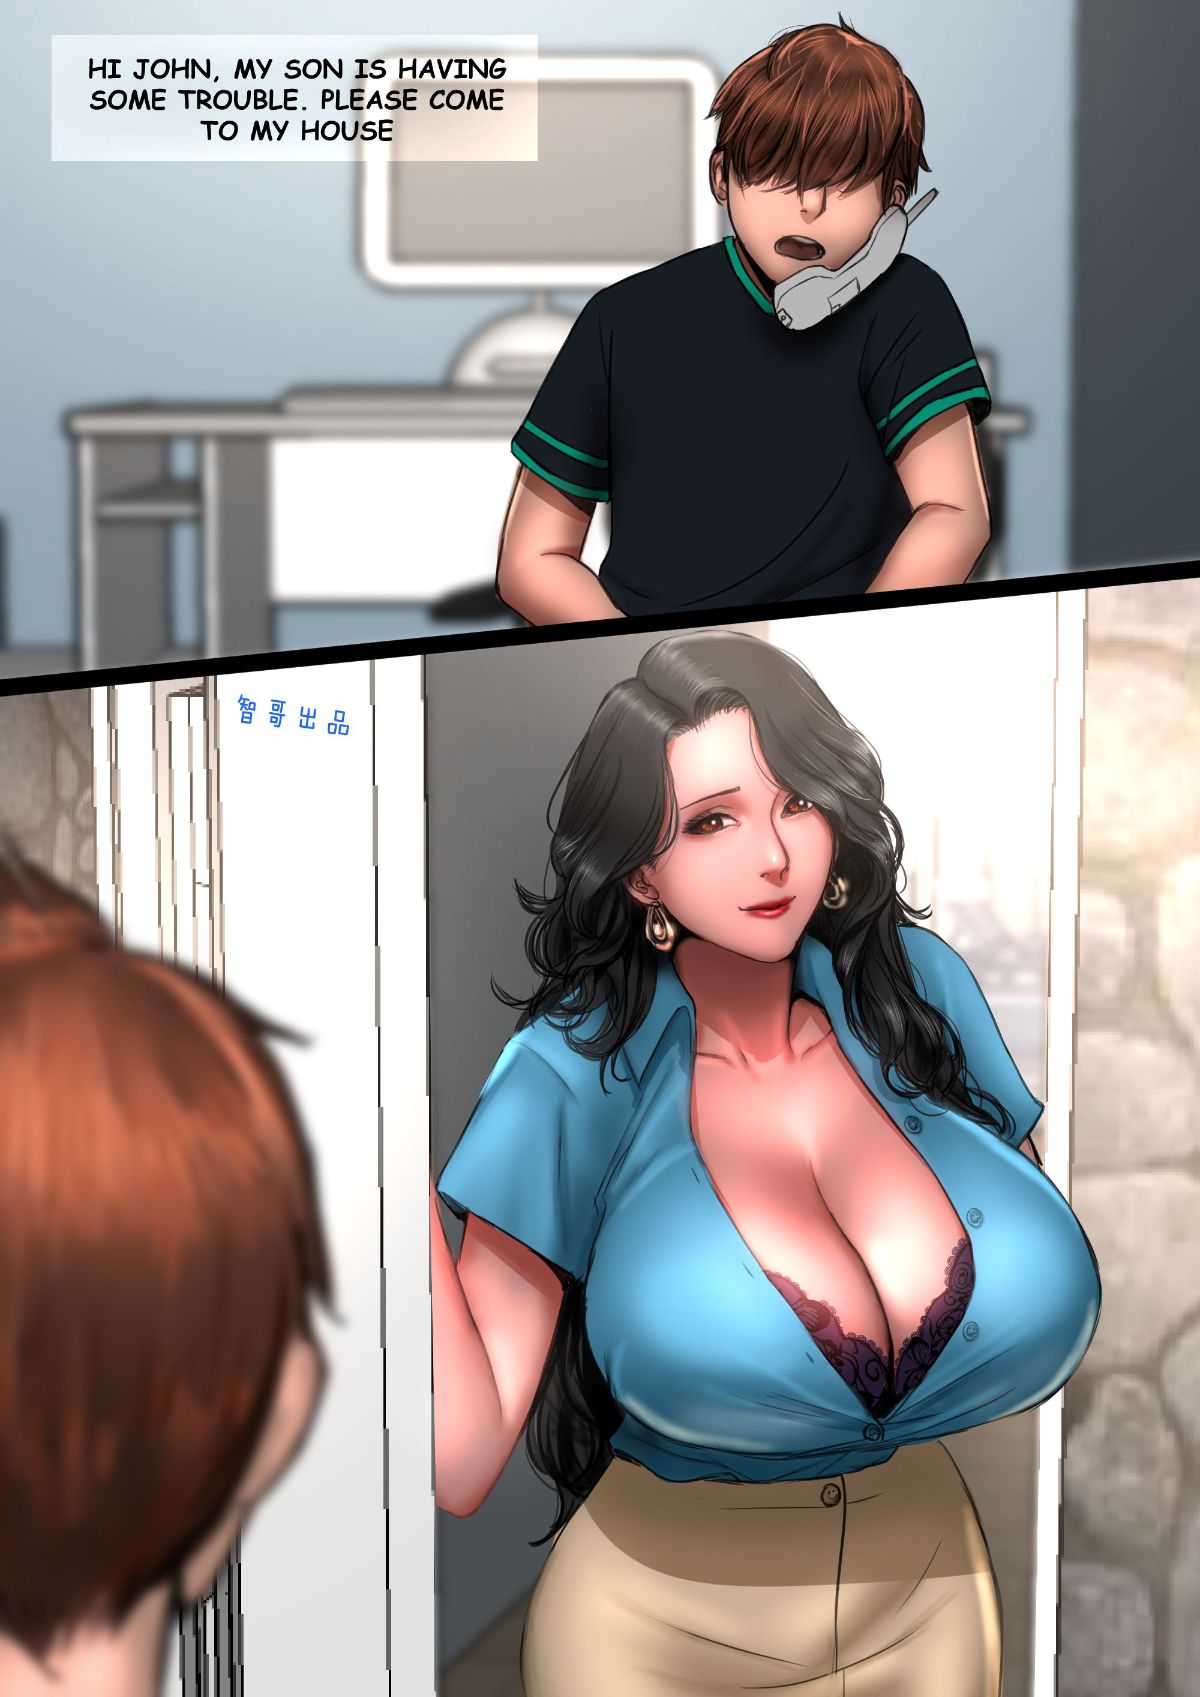 An Hentai porn with Teacher,Naughty,Hot comic designed by artist Scarlett A...